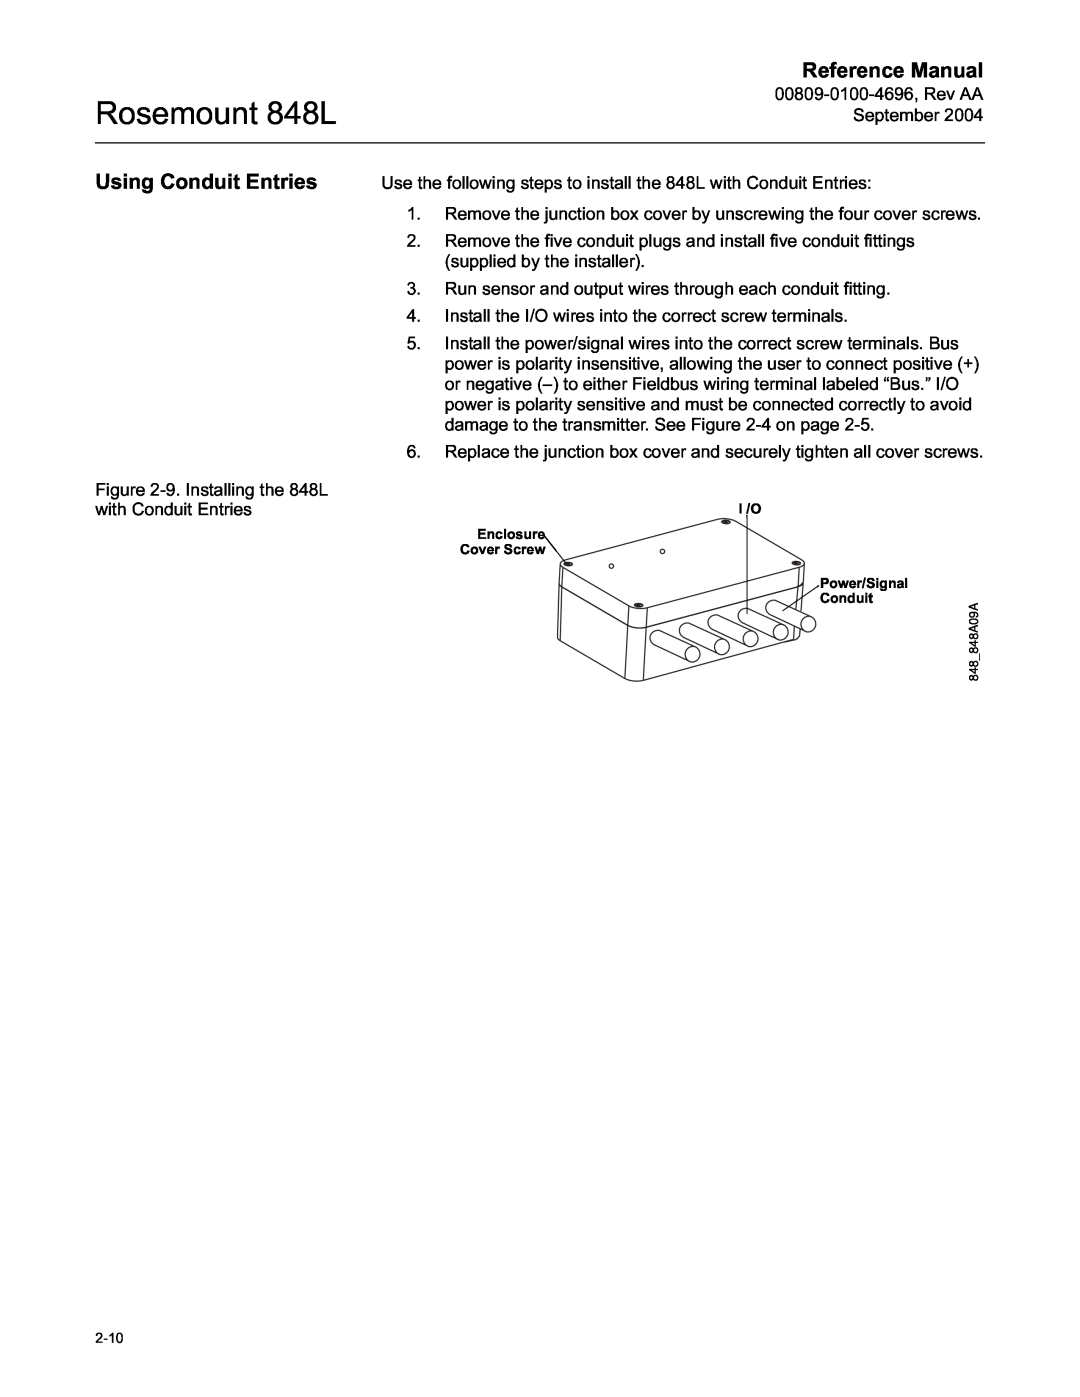 Emerson manual Using Conduit Entries, Rosemount 848L, Reference Manual 